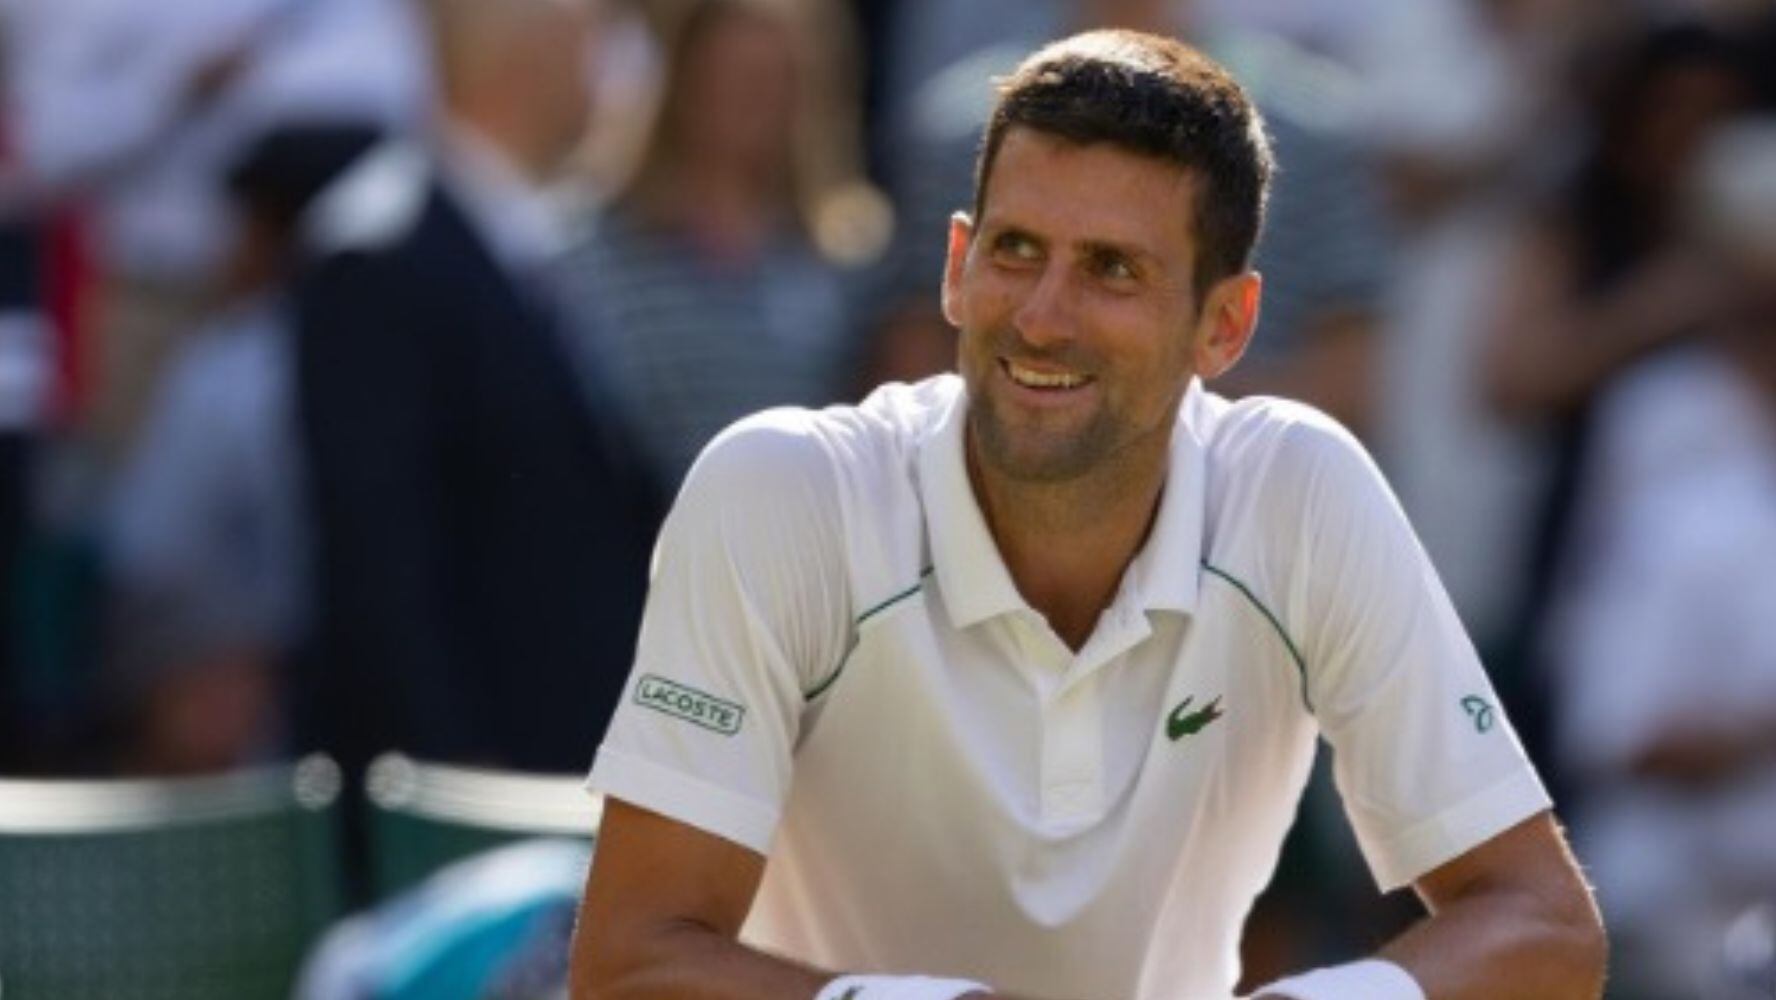 Novak Djokovic se posicionó en torno a la guerra en Ucrania. (Foto: Instagram @djokernole)